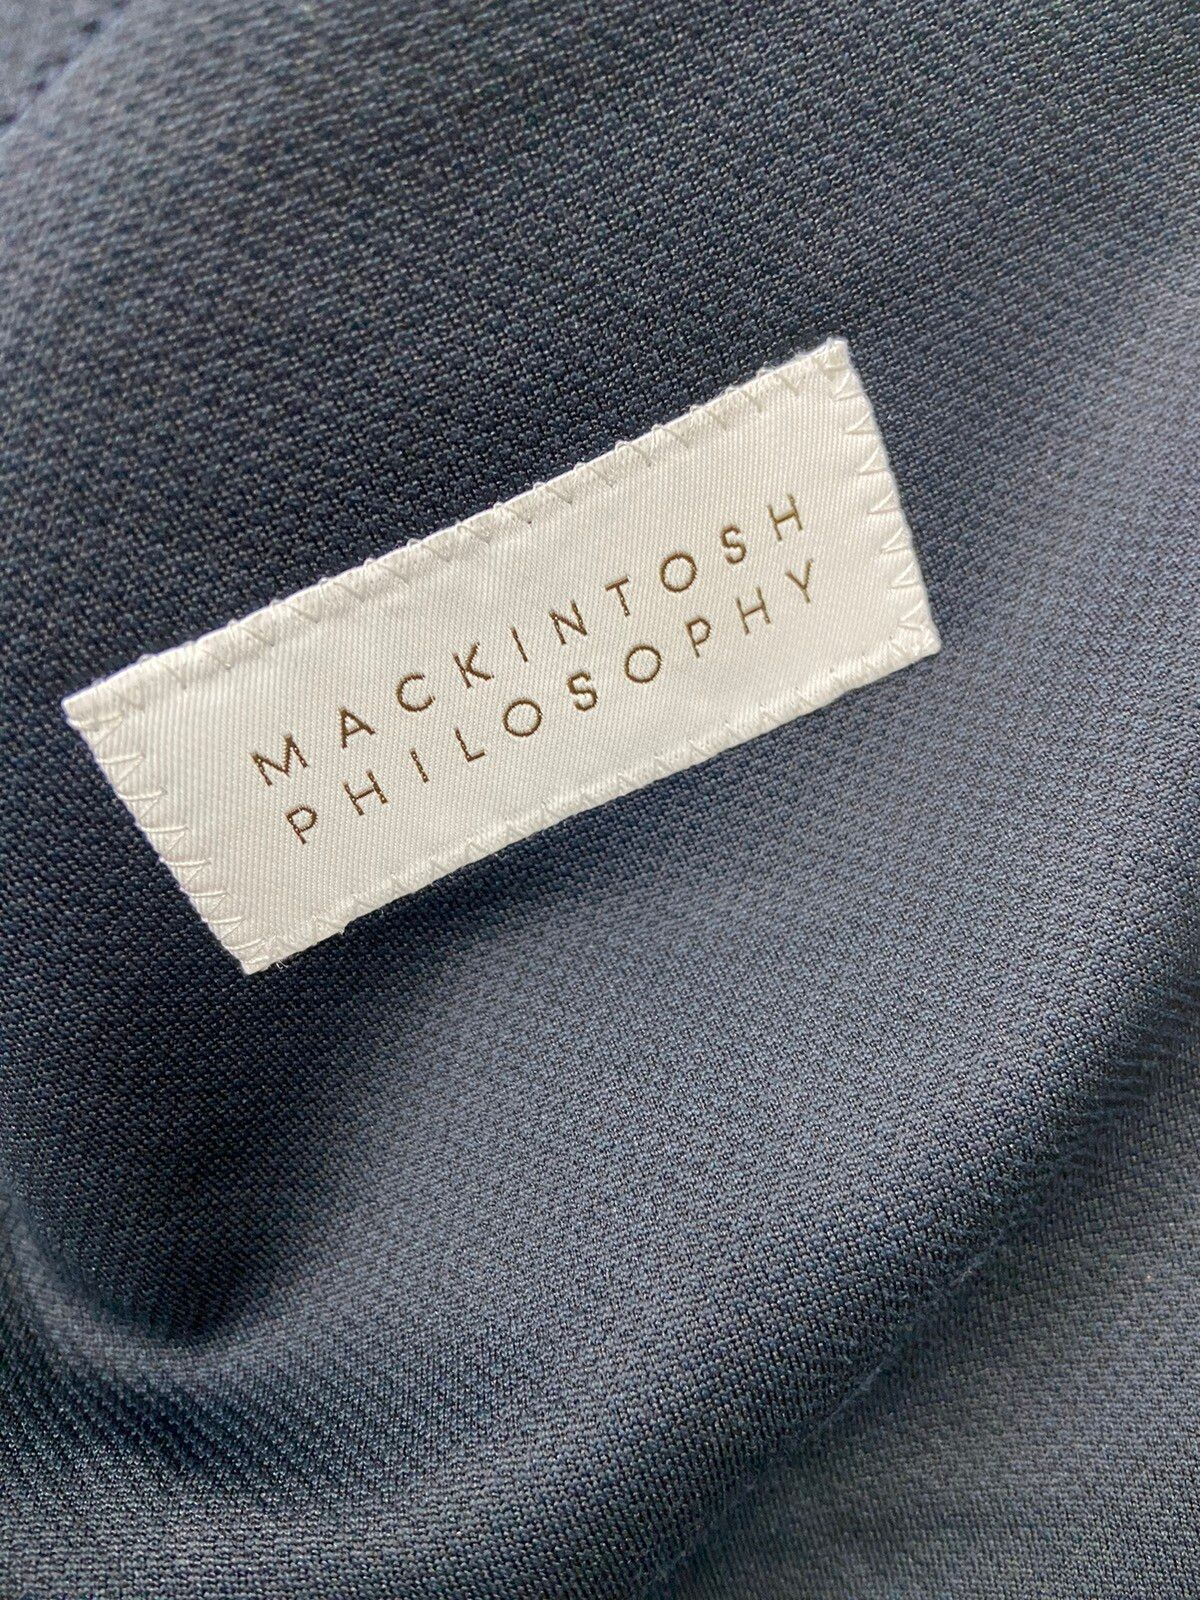 Mackintosh Vintage Mackintosh Philosophy Trotter Jacket Size 40R - 8 Thumbnail